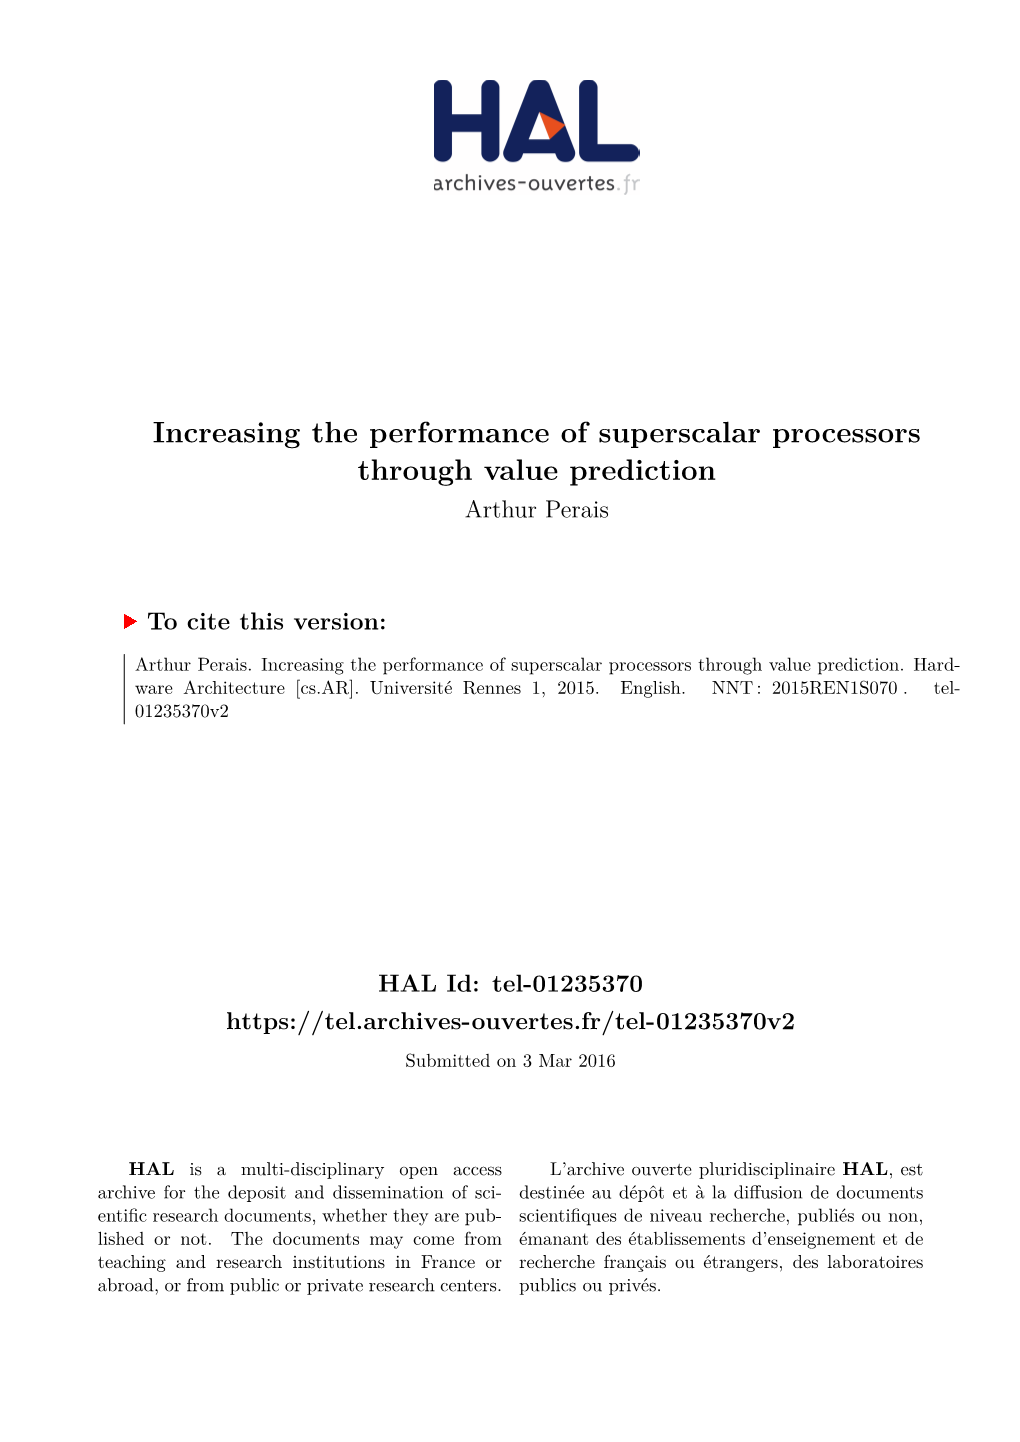 Increasing the Performance of Superscalar Processors Through Value Prediction Arthur Perais